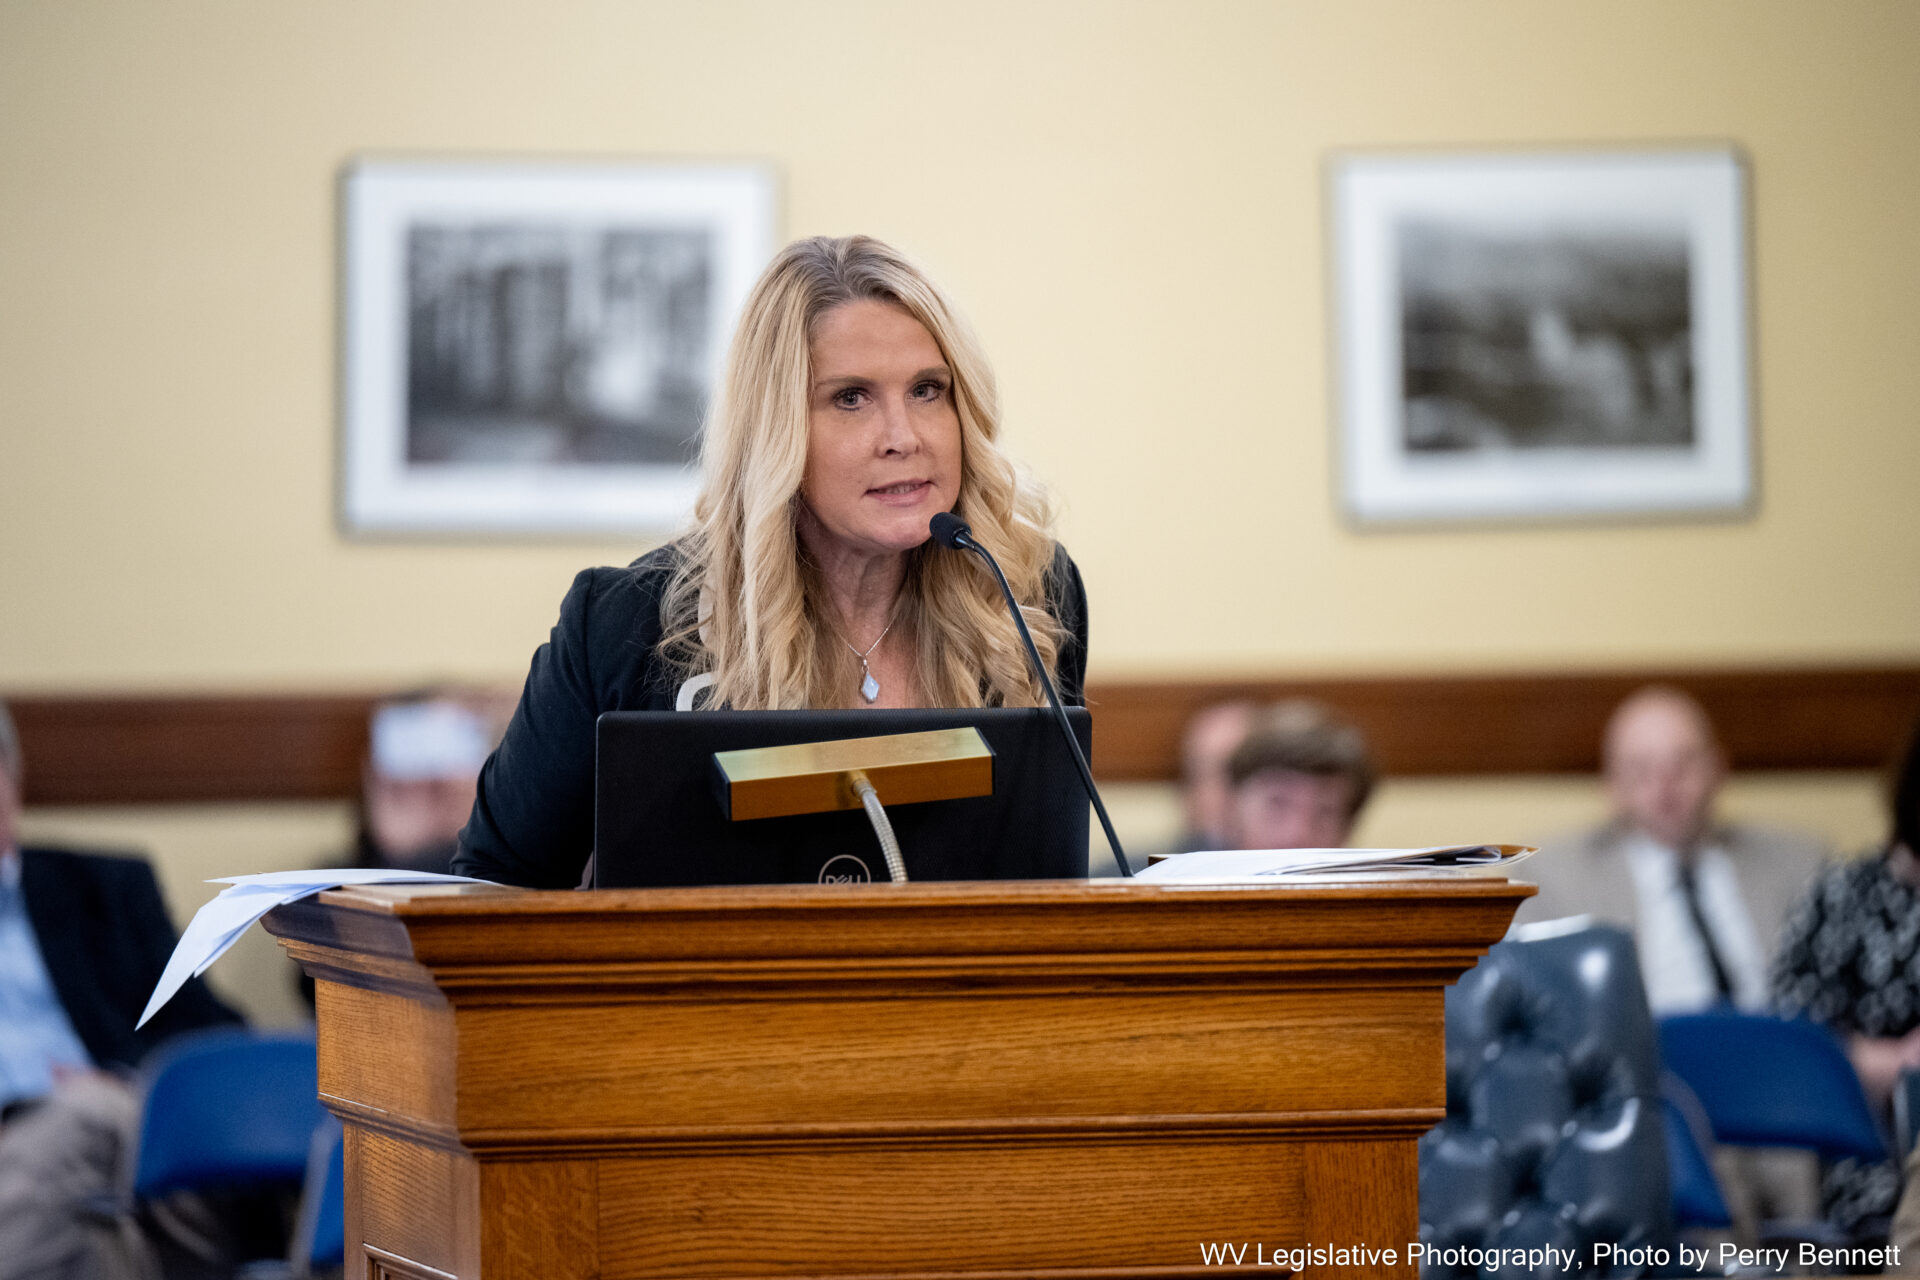 Blonde lady at podium speaks to legislative committee